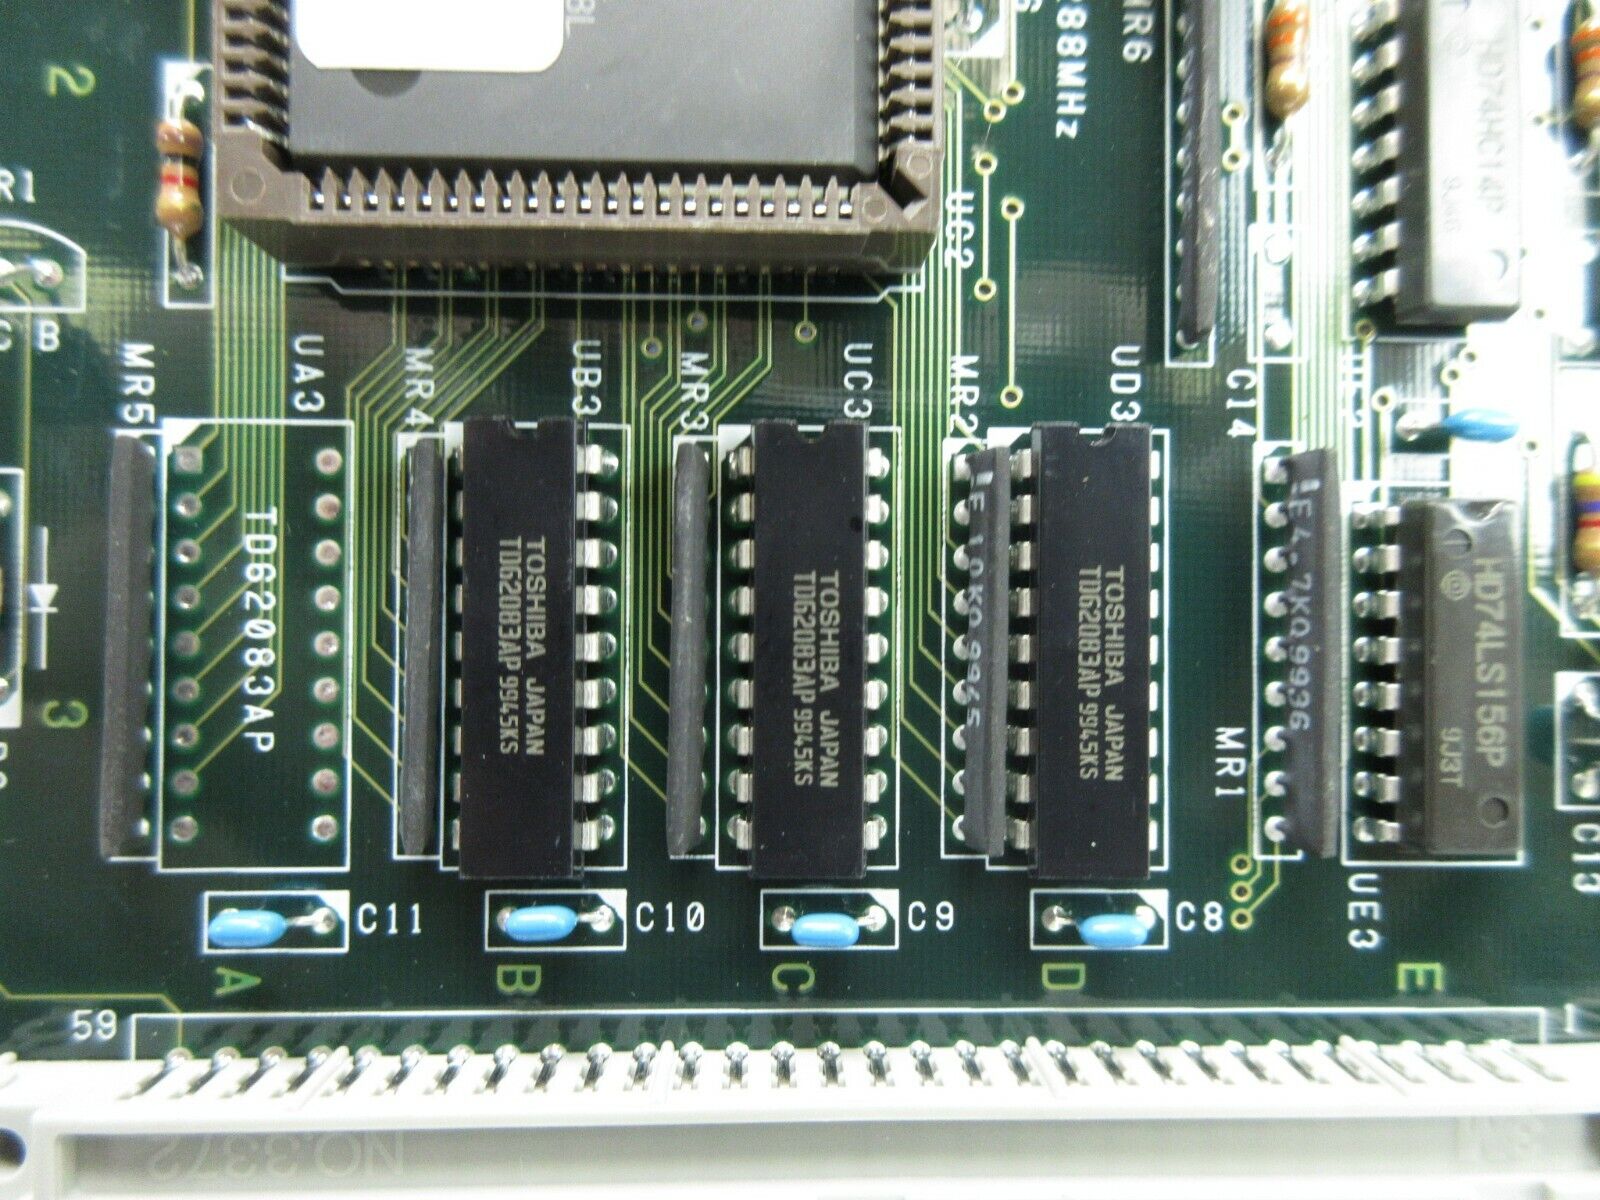 Kokusai Electric D2E01362 Processor Board PCB LCONT2 Vertron III DD-803V Used